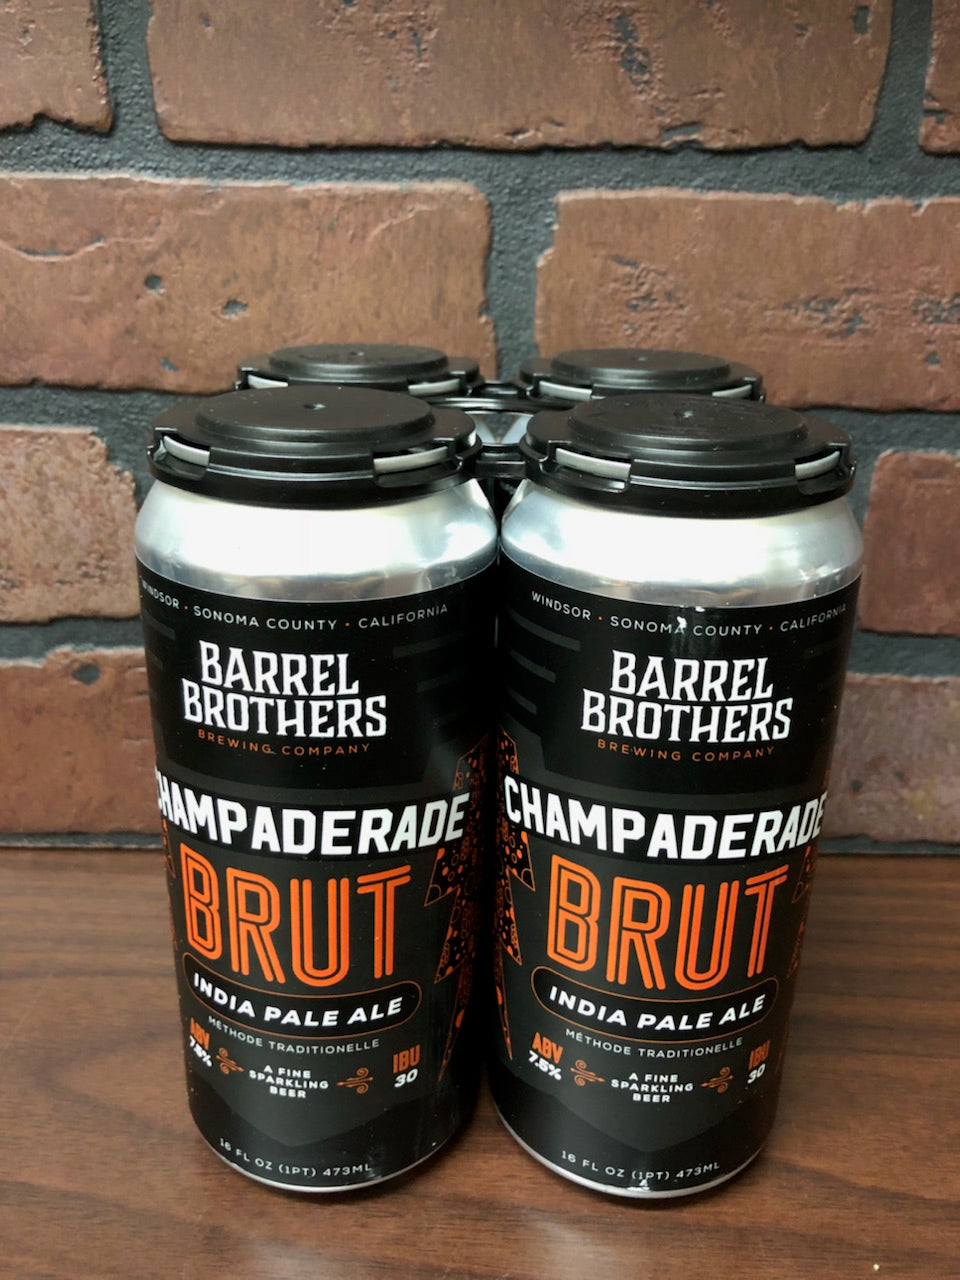 Barrel Brothers Champaderade Brut IPA 4 pack cans